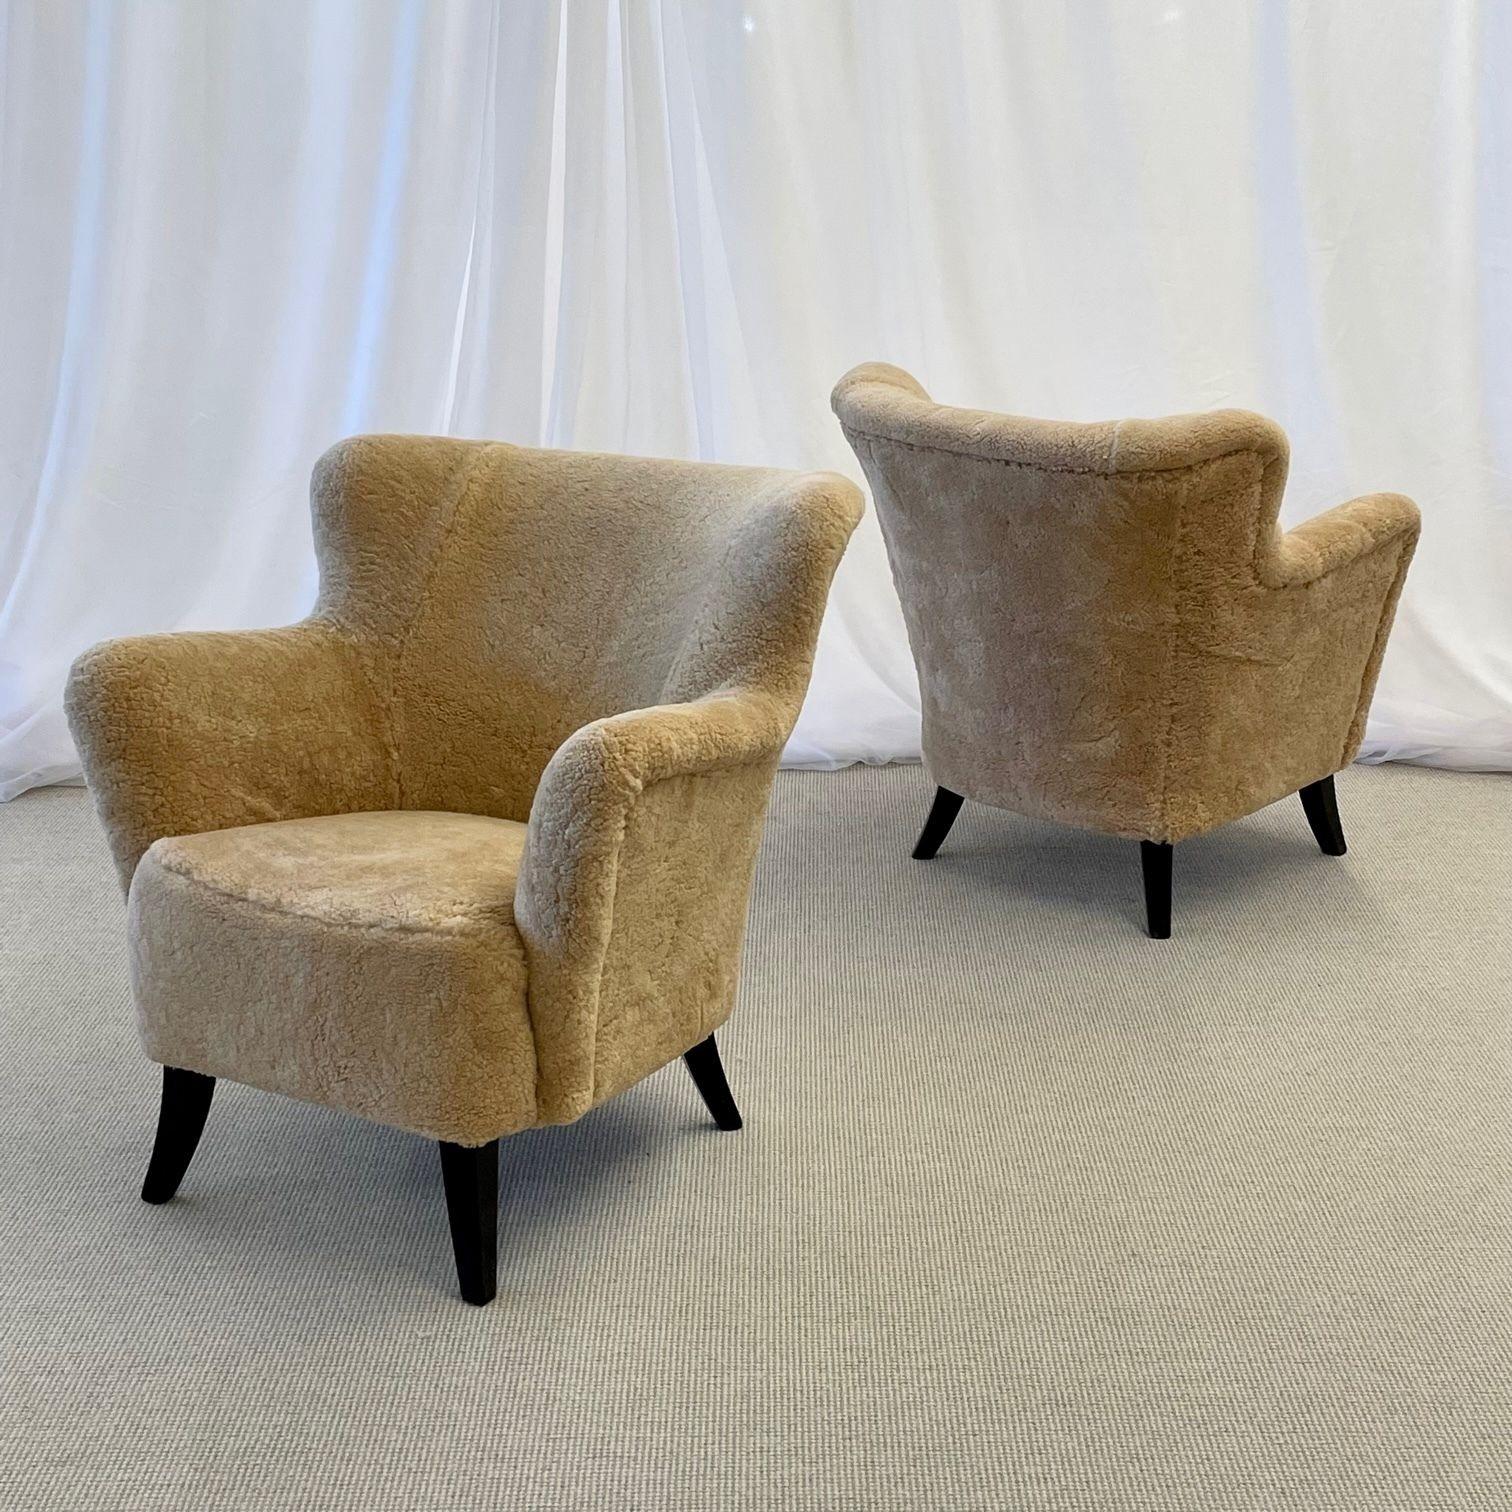 European Danish Mid-Century Modern, Lounge Chairs, Sheepskin, Ebonized Wood, 1950s For Sale